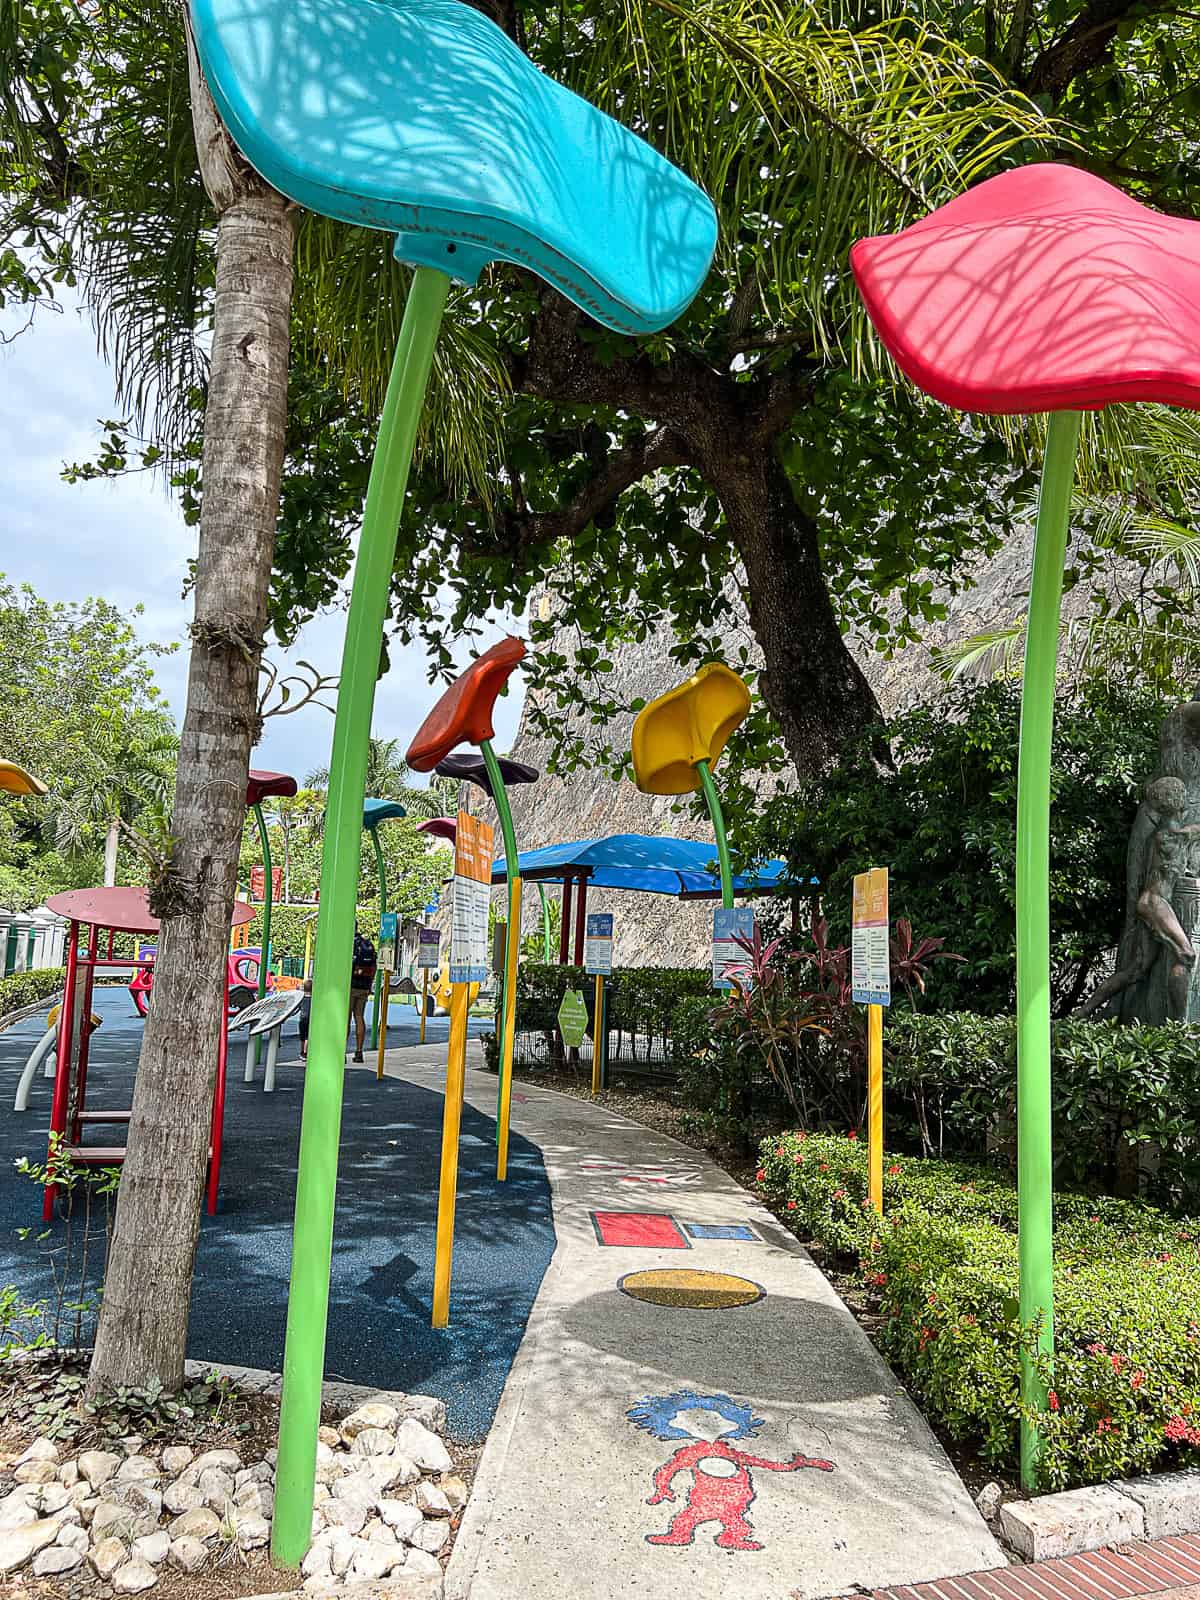 Entrance to Free San Juan Playground